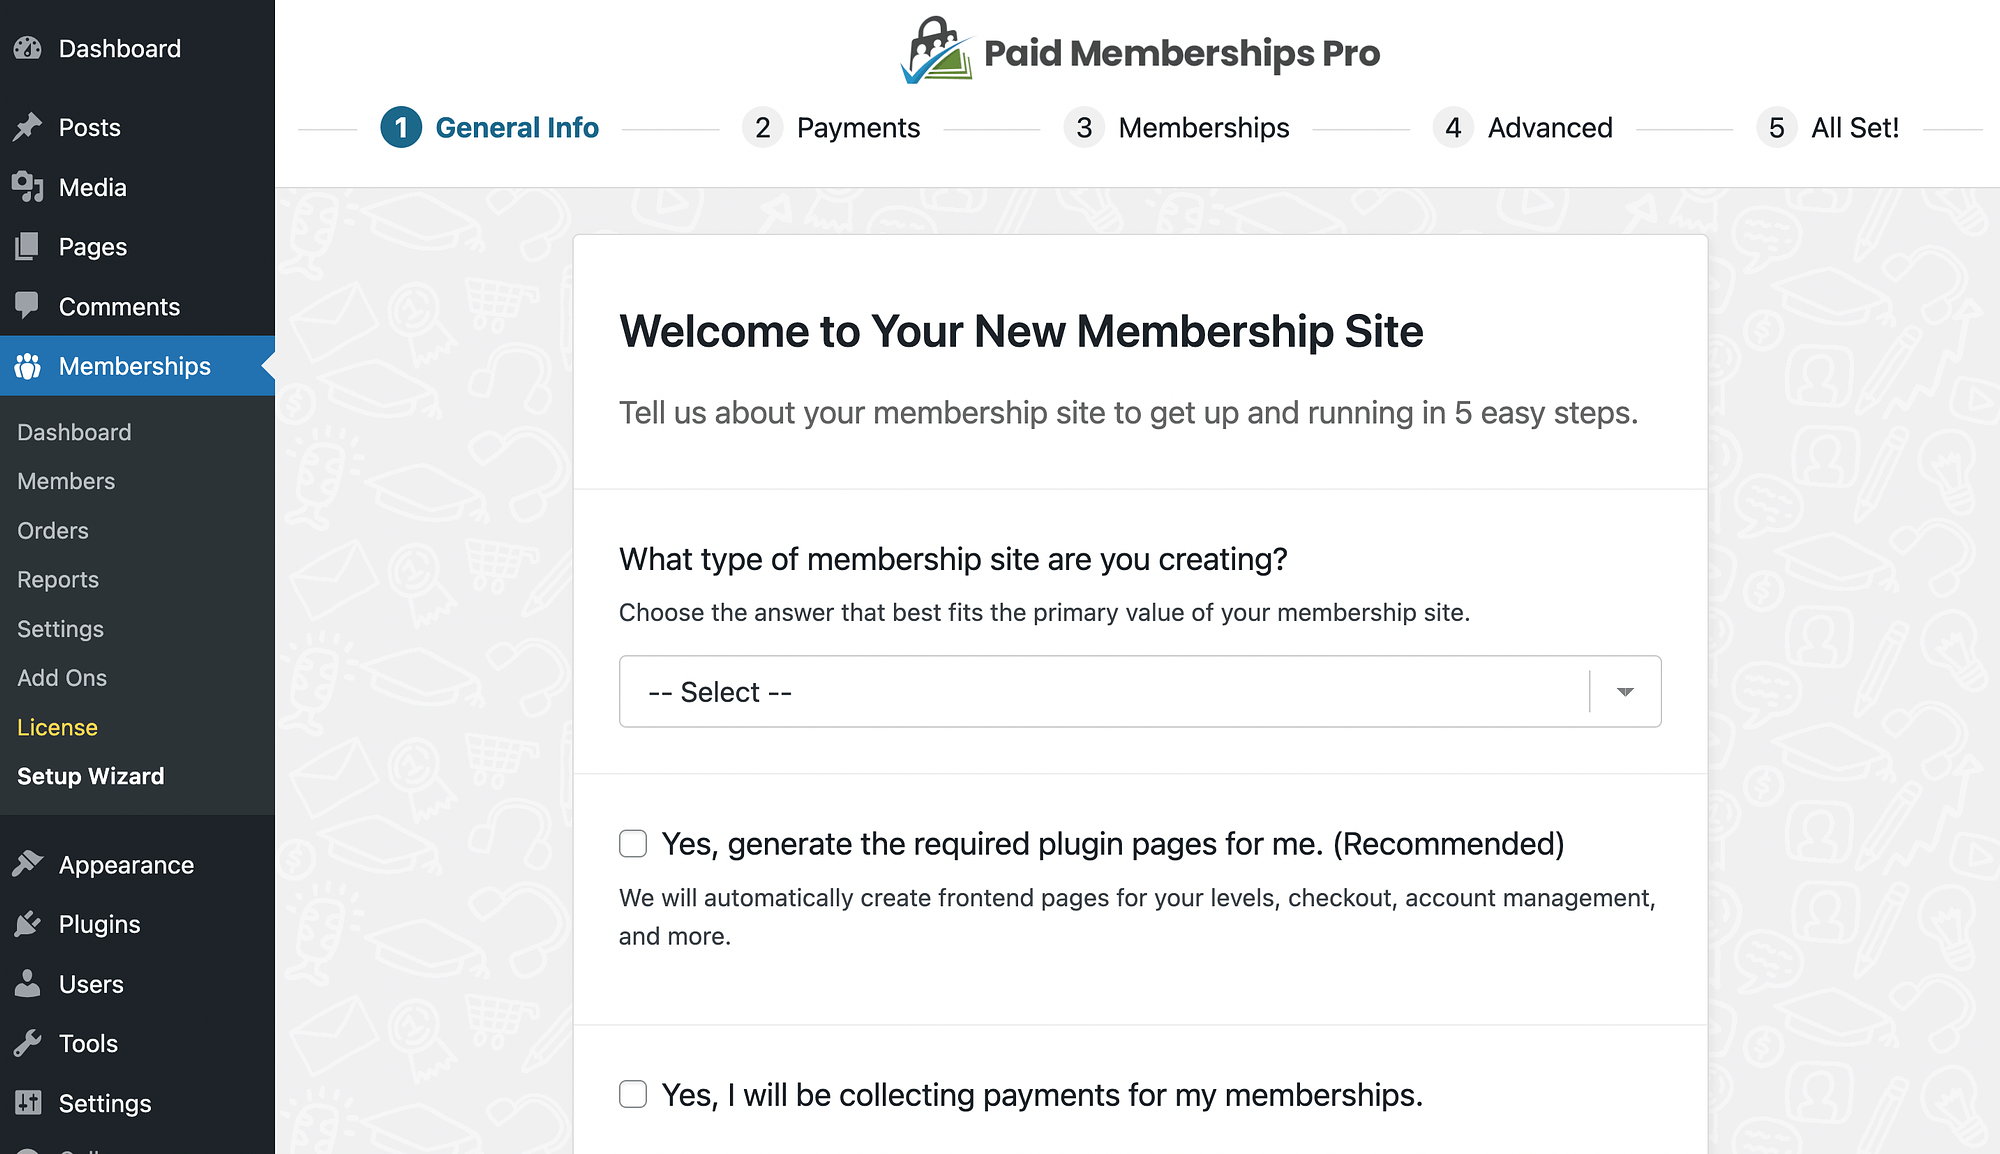 Paid Memberships Pro setup wizard.